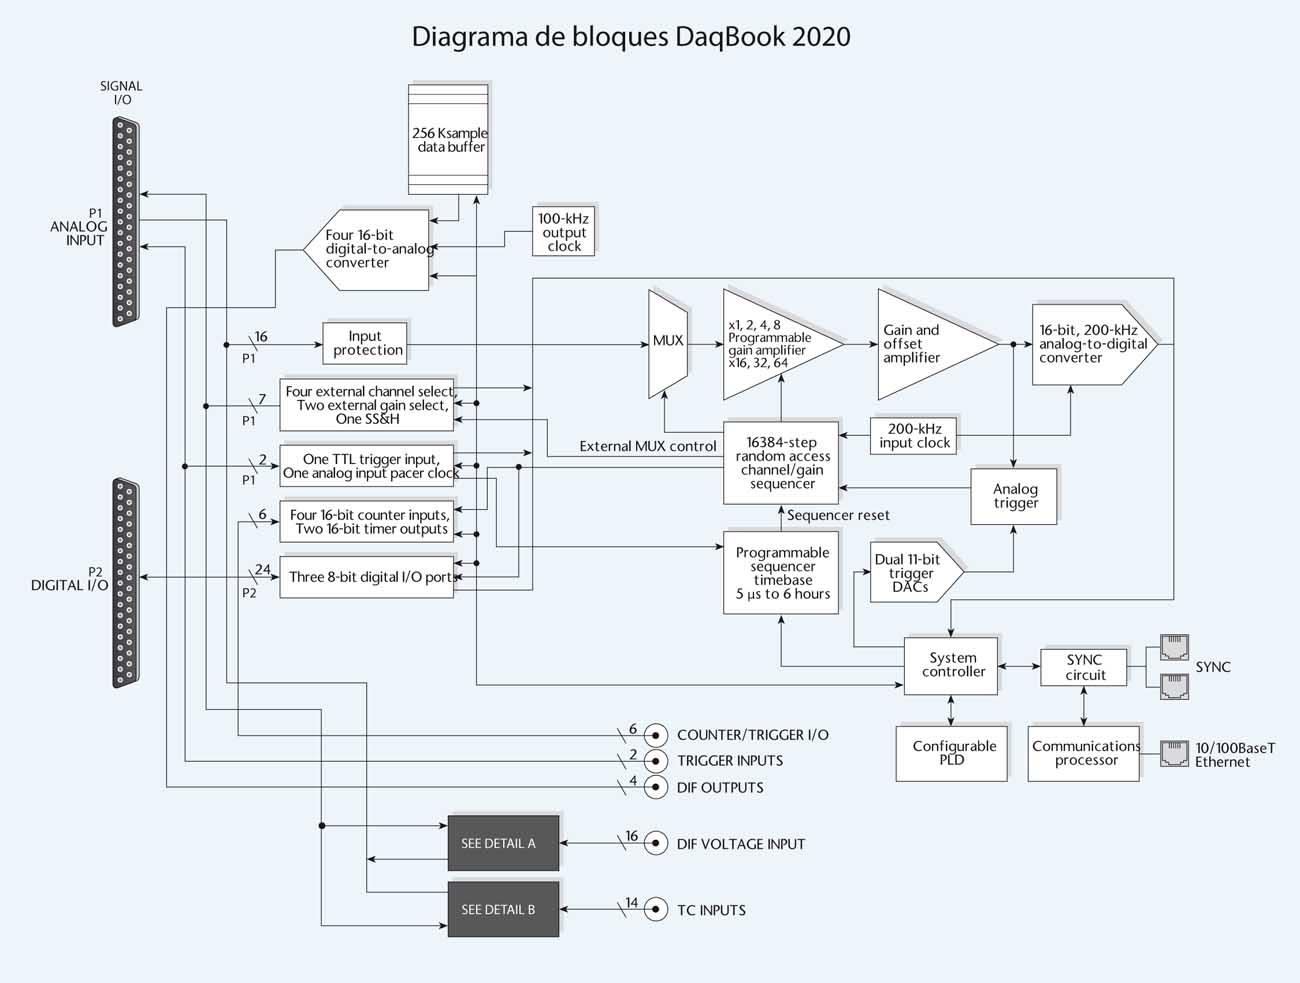 Diagrama daqbook 2020